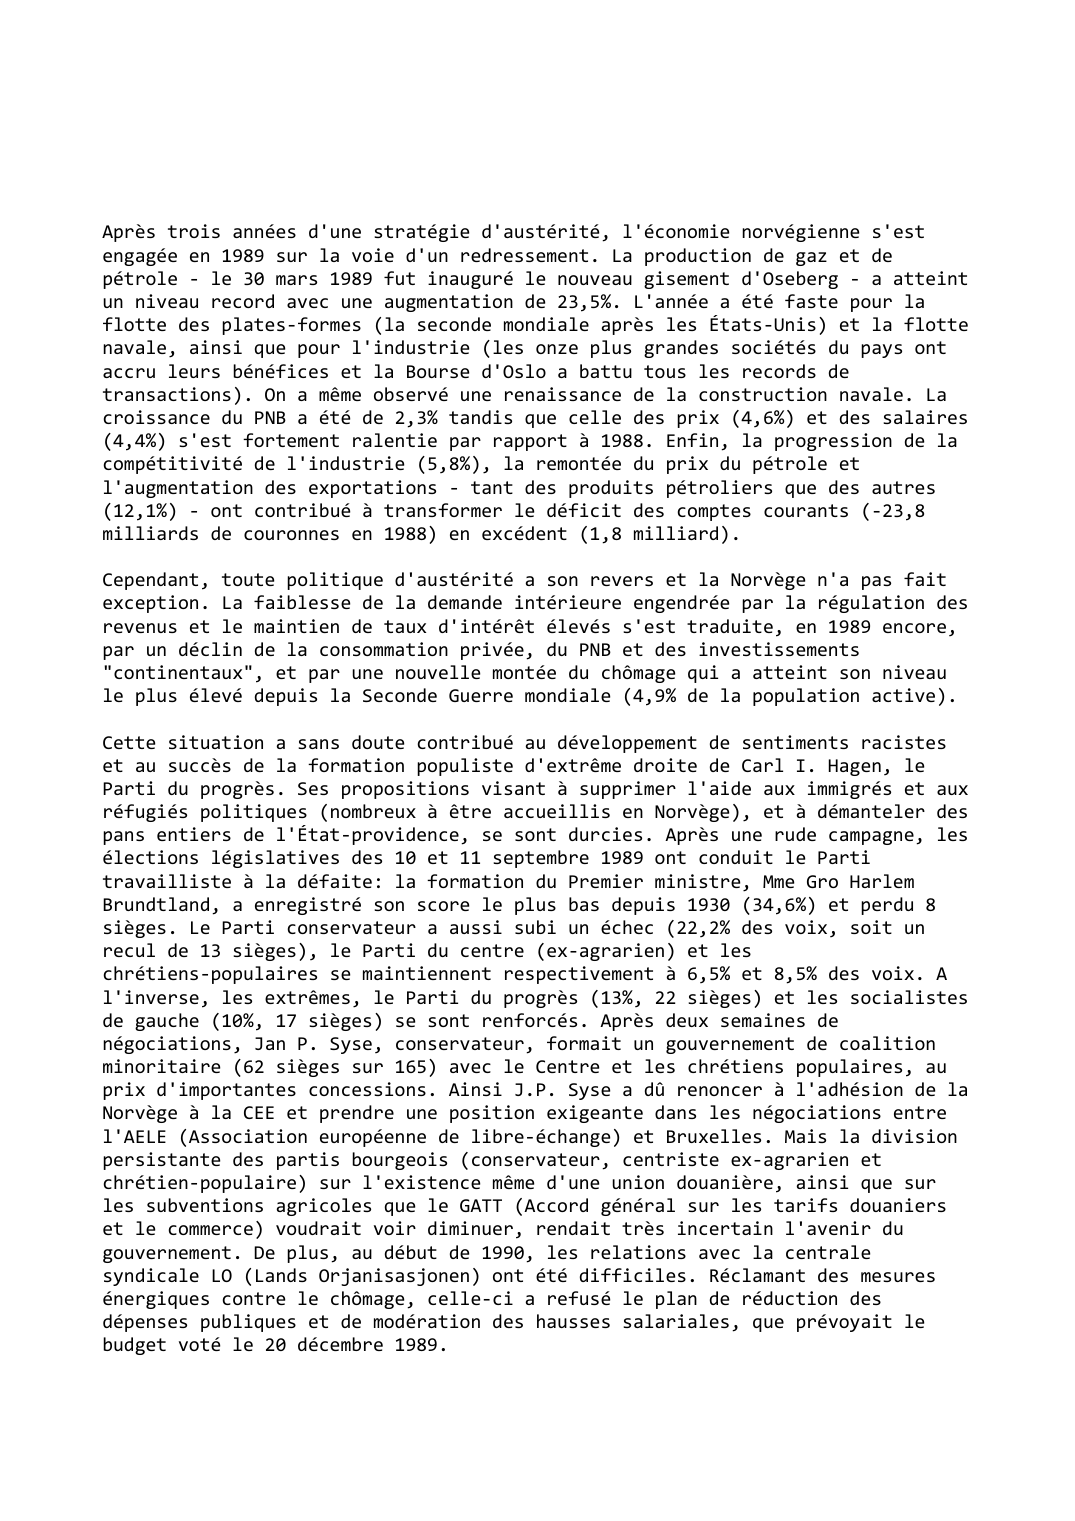 Prévisualisation du document Norvège (1989-1990)